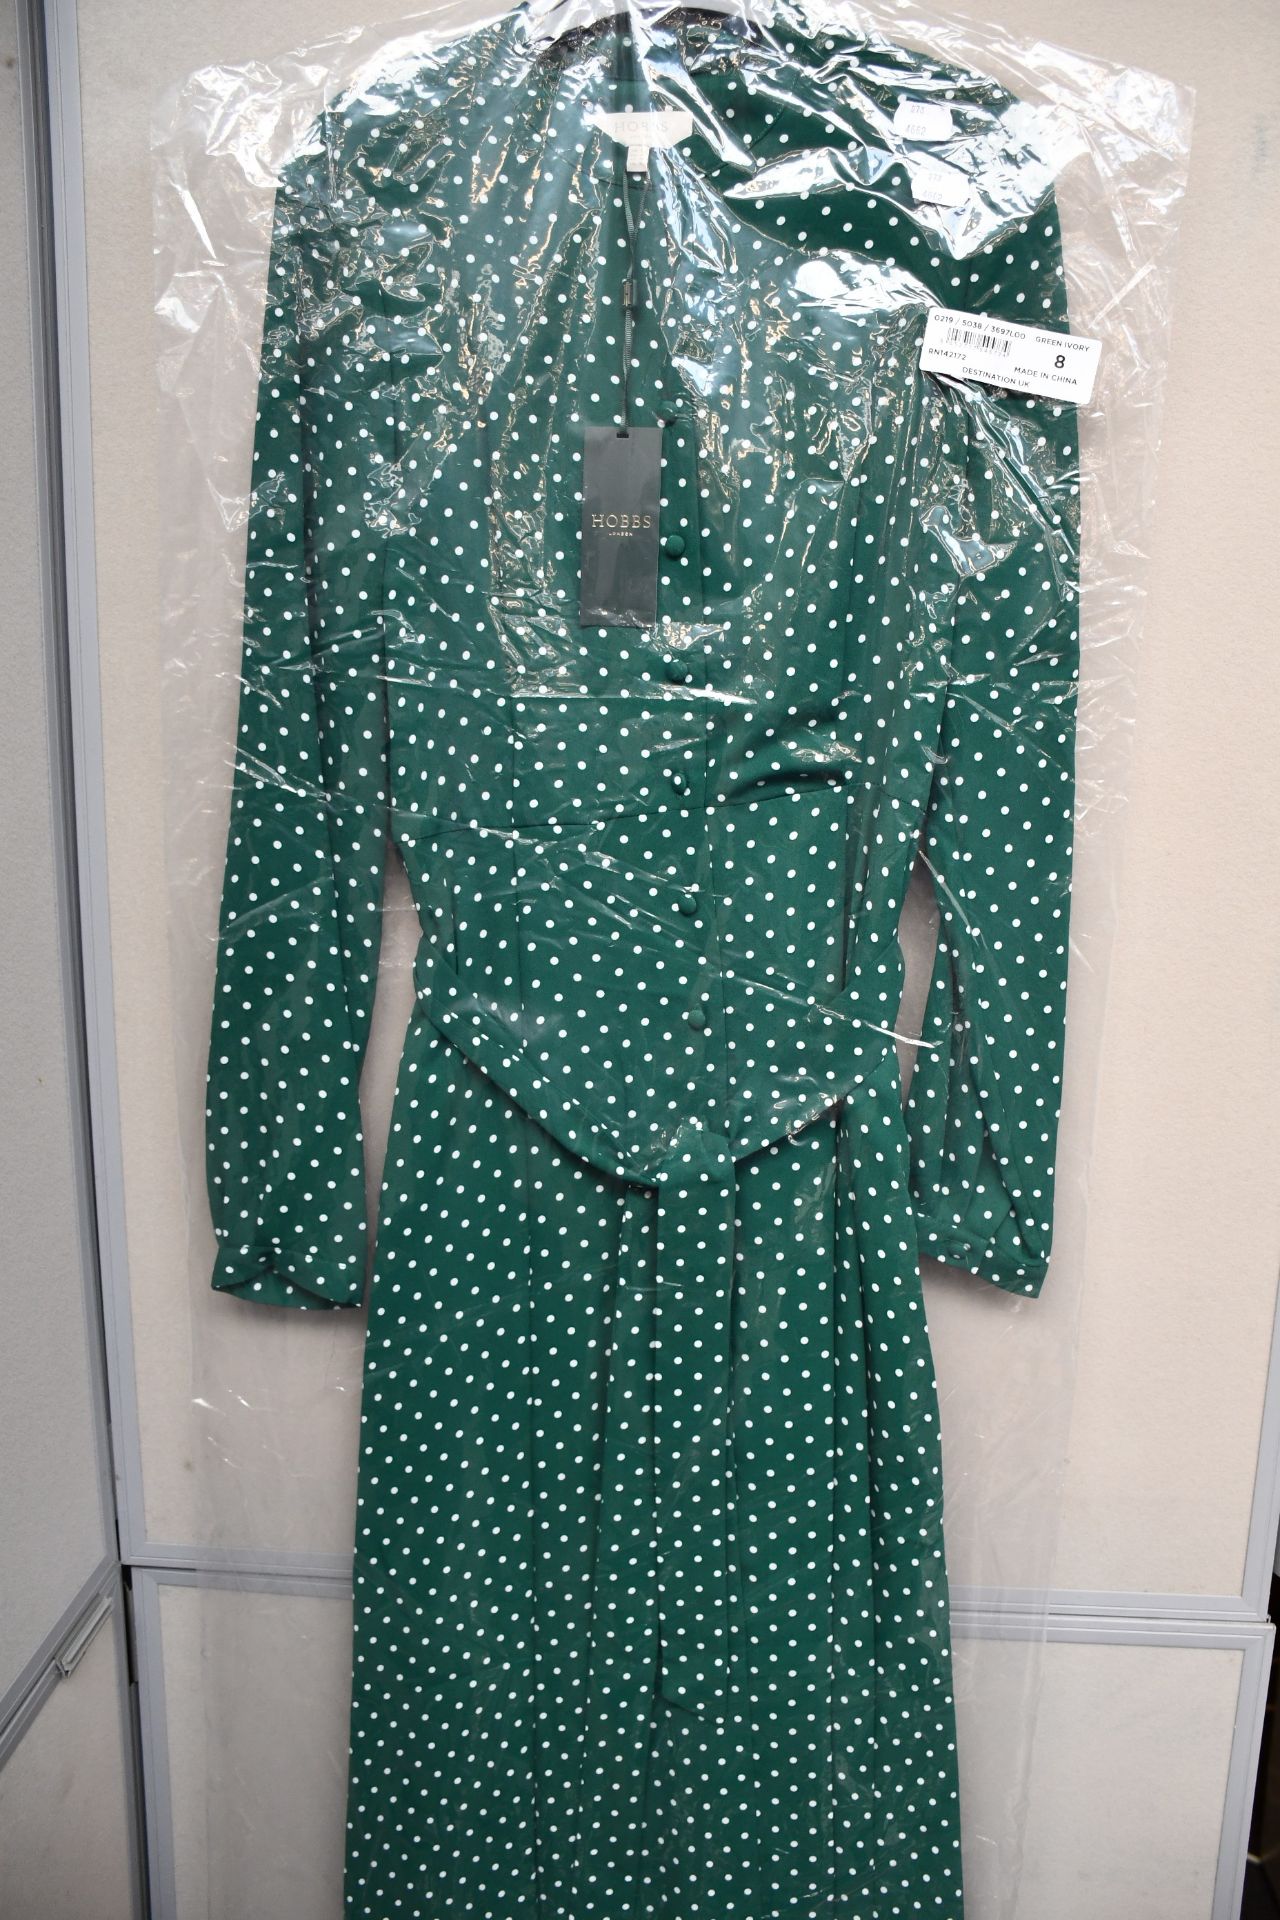 An as new Hobbs London Tarini dress (Size 8 - RRP £159).